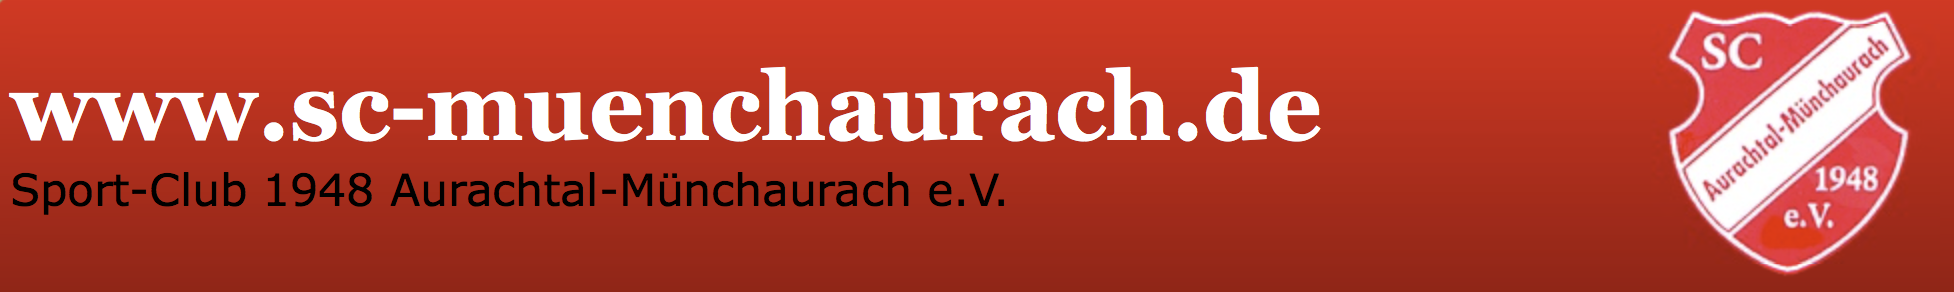 (c) Sc-muenchaurach.de